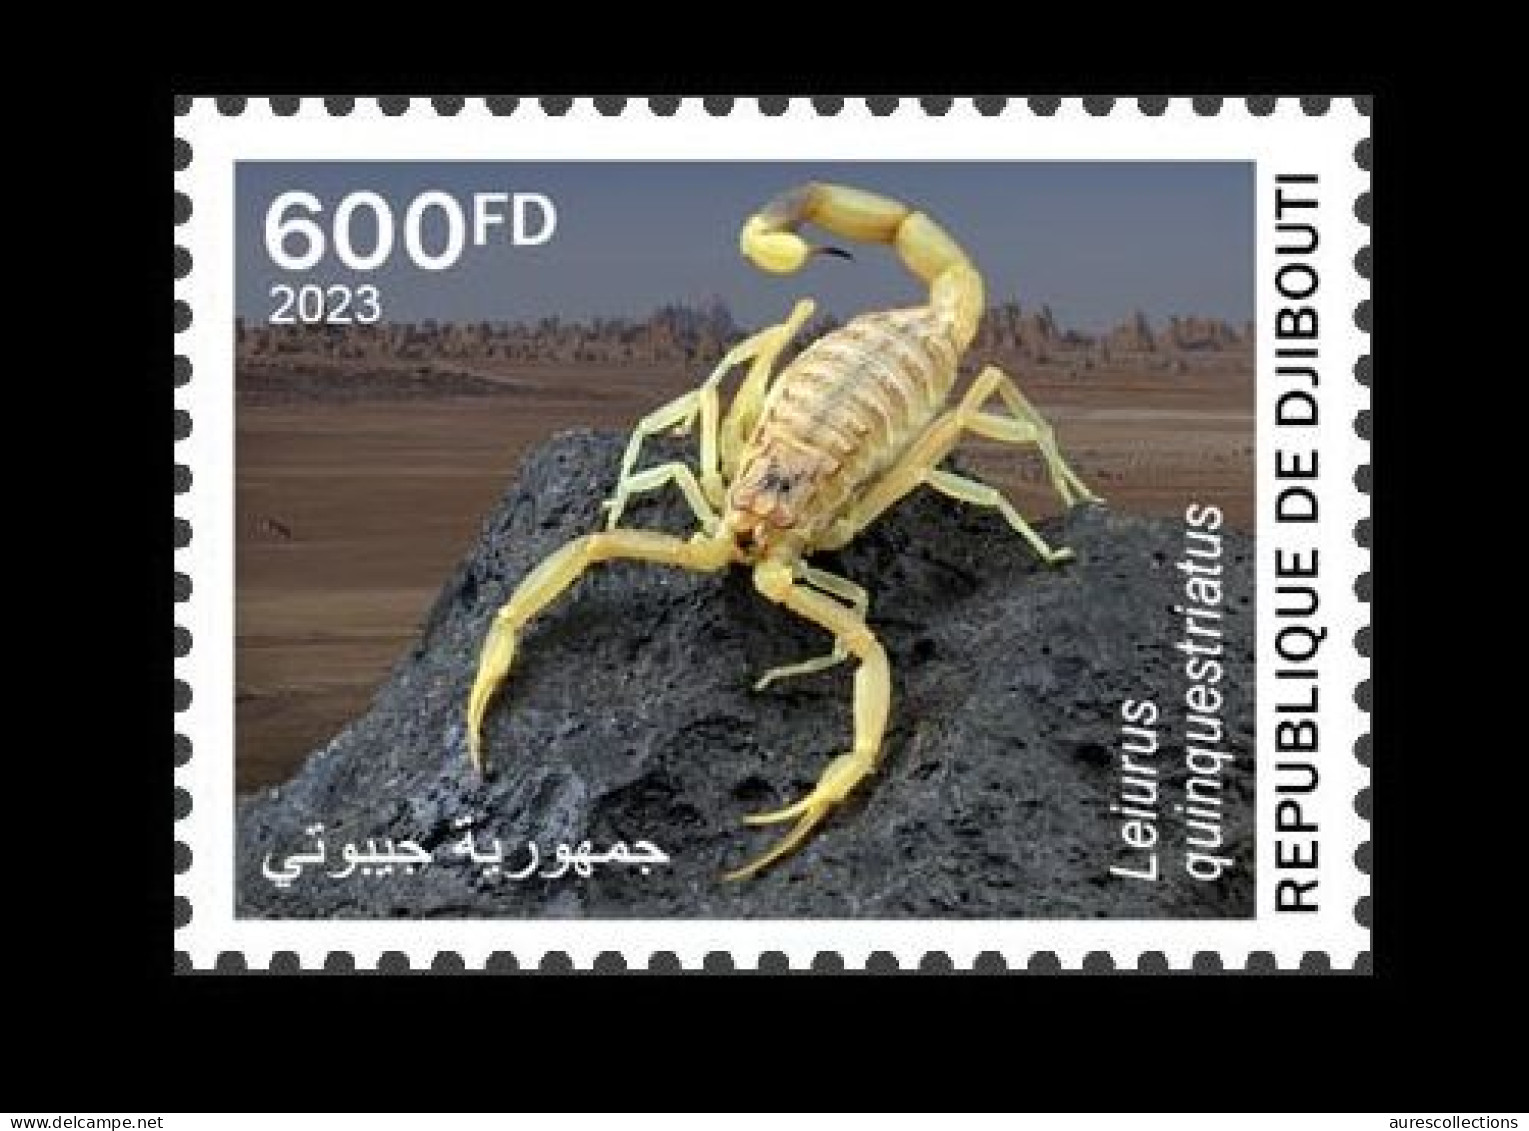 DJIBOUTI 2023 STAMP 1V - POISONOUS TOXIC VENOMOUS SPECIES - SCORPION SCORPIONS ARAIGNEES SPIDER SPIDERS - MNH - Spiders